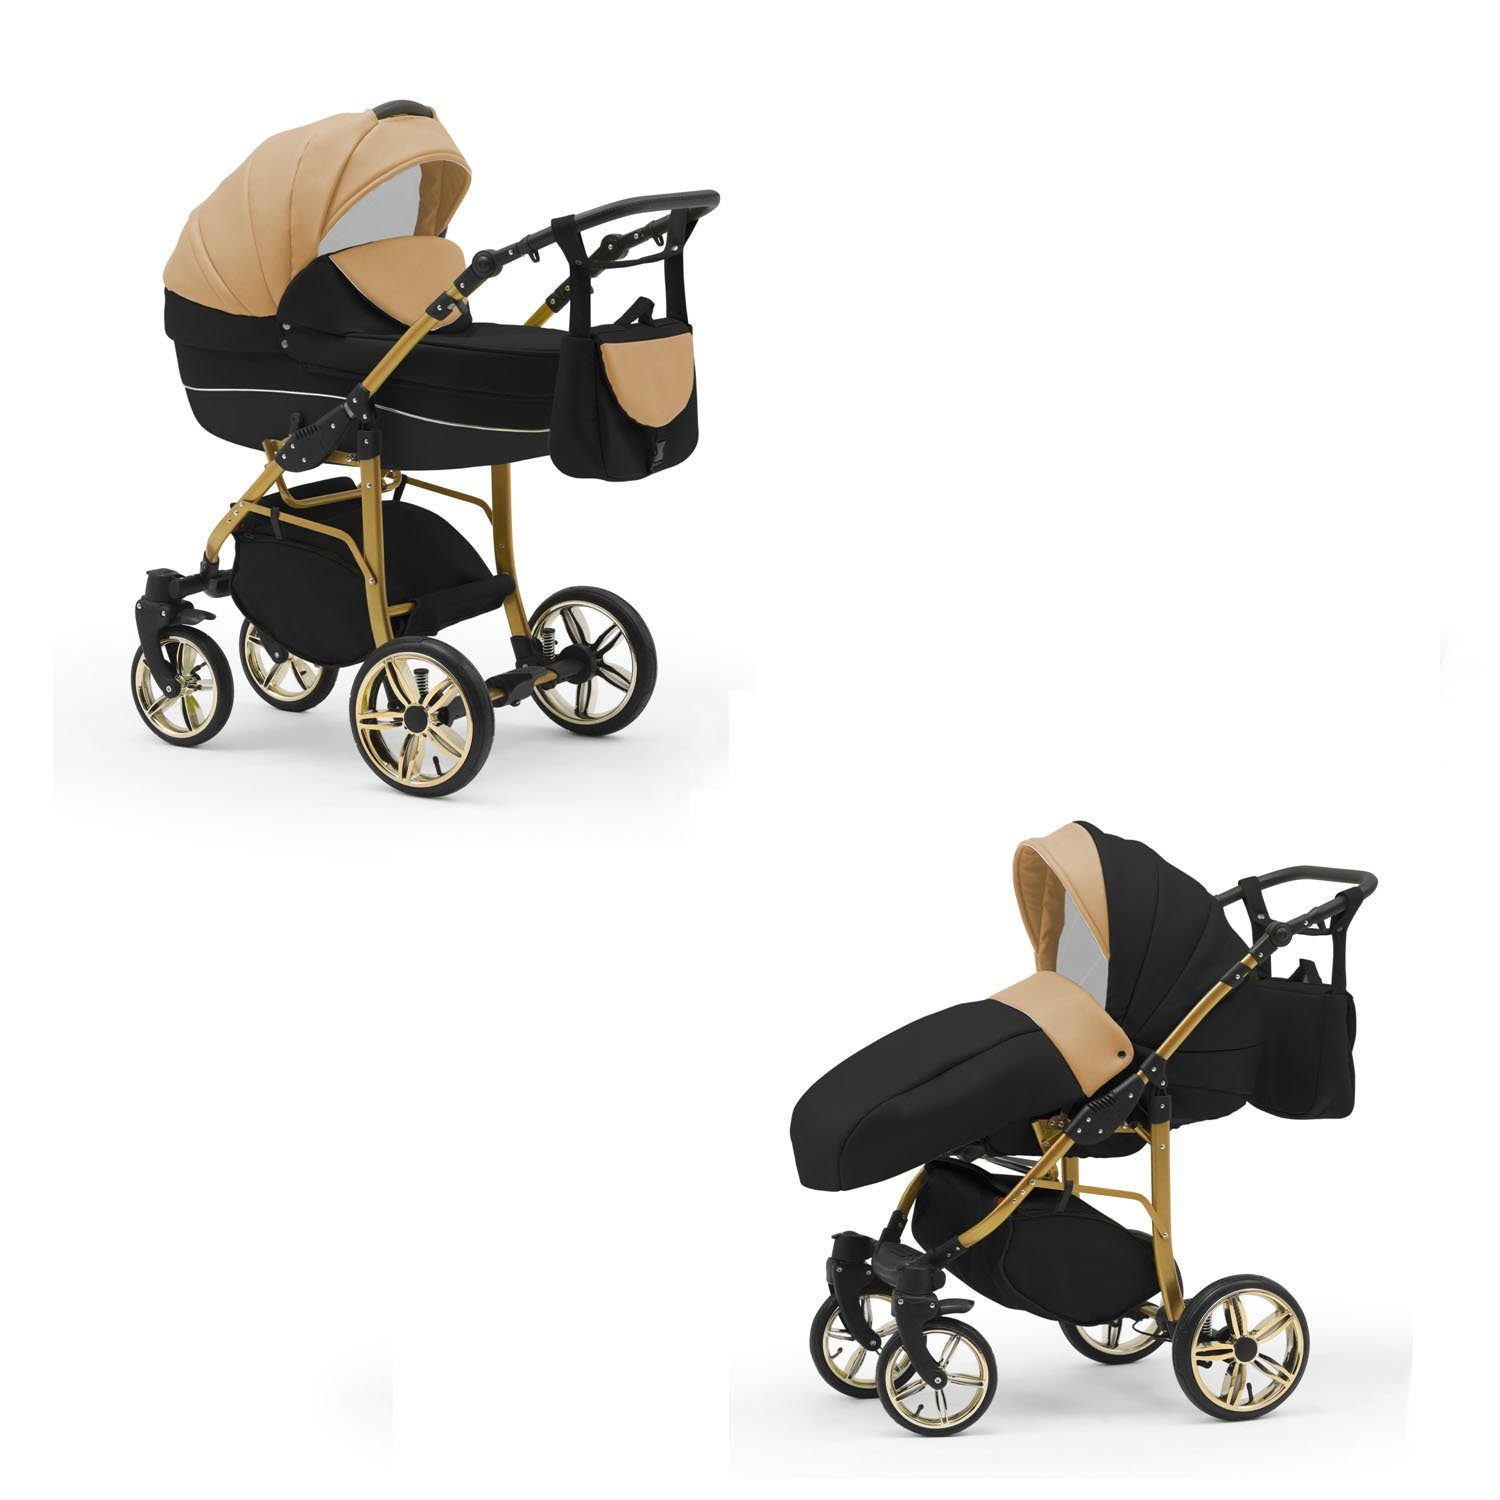 46 babies-on-wheels 1 Kombi-Kinderwagen - Beige-Schwarz 2 - Kinderwagen-Set in Teile Cosmo 13 Farben Gold in